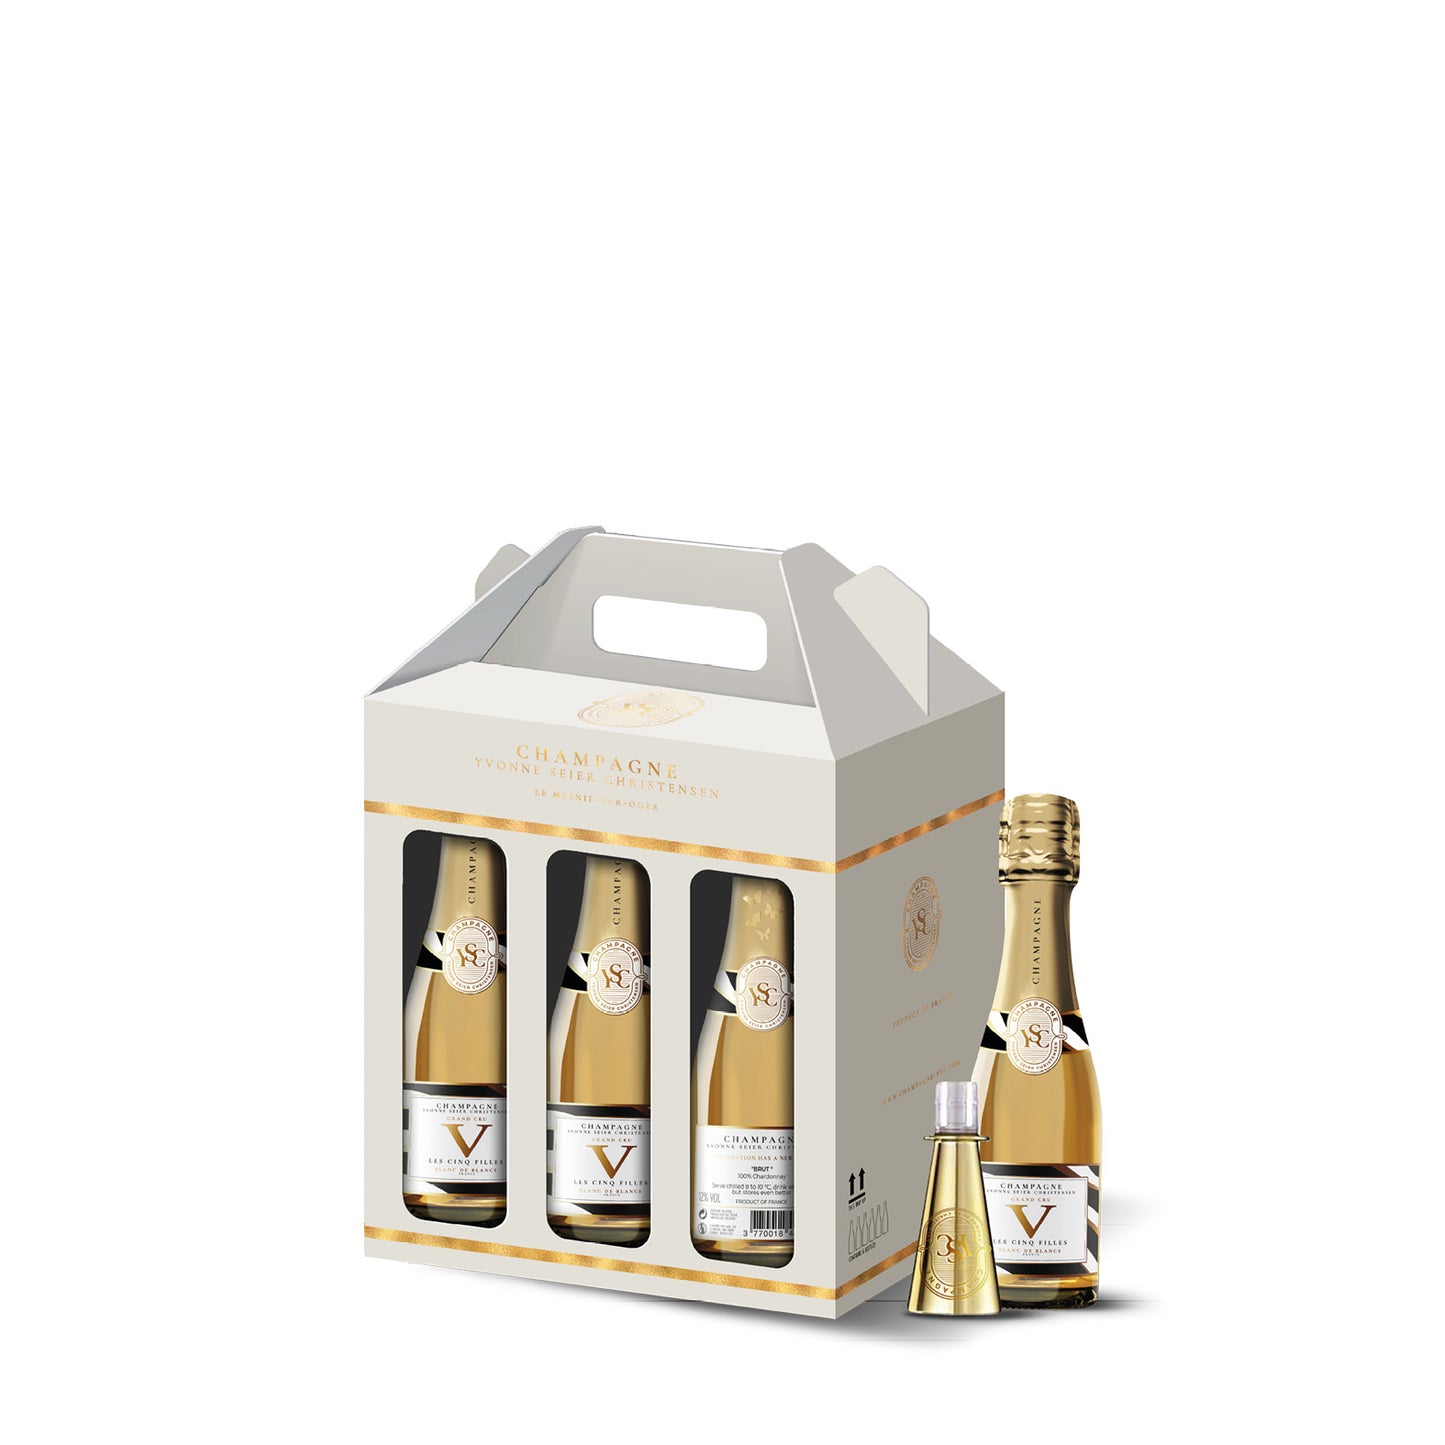 Cinq all – Filles YSC Champagne Les